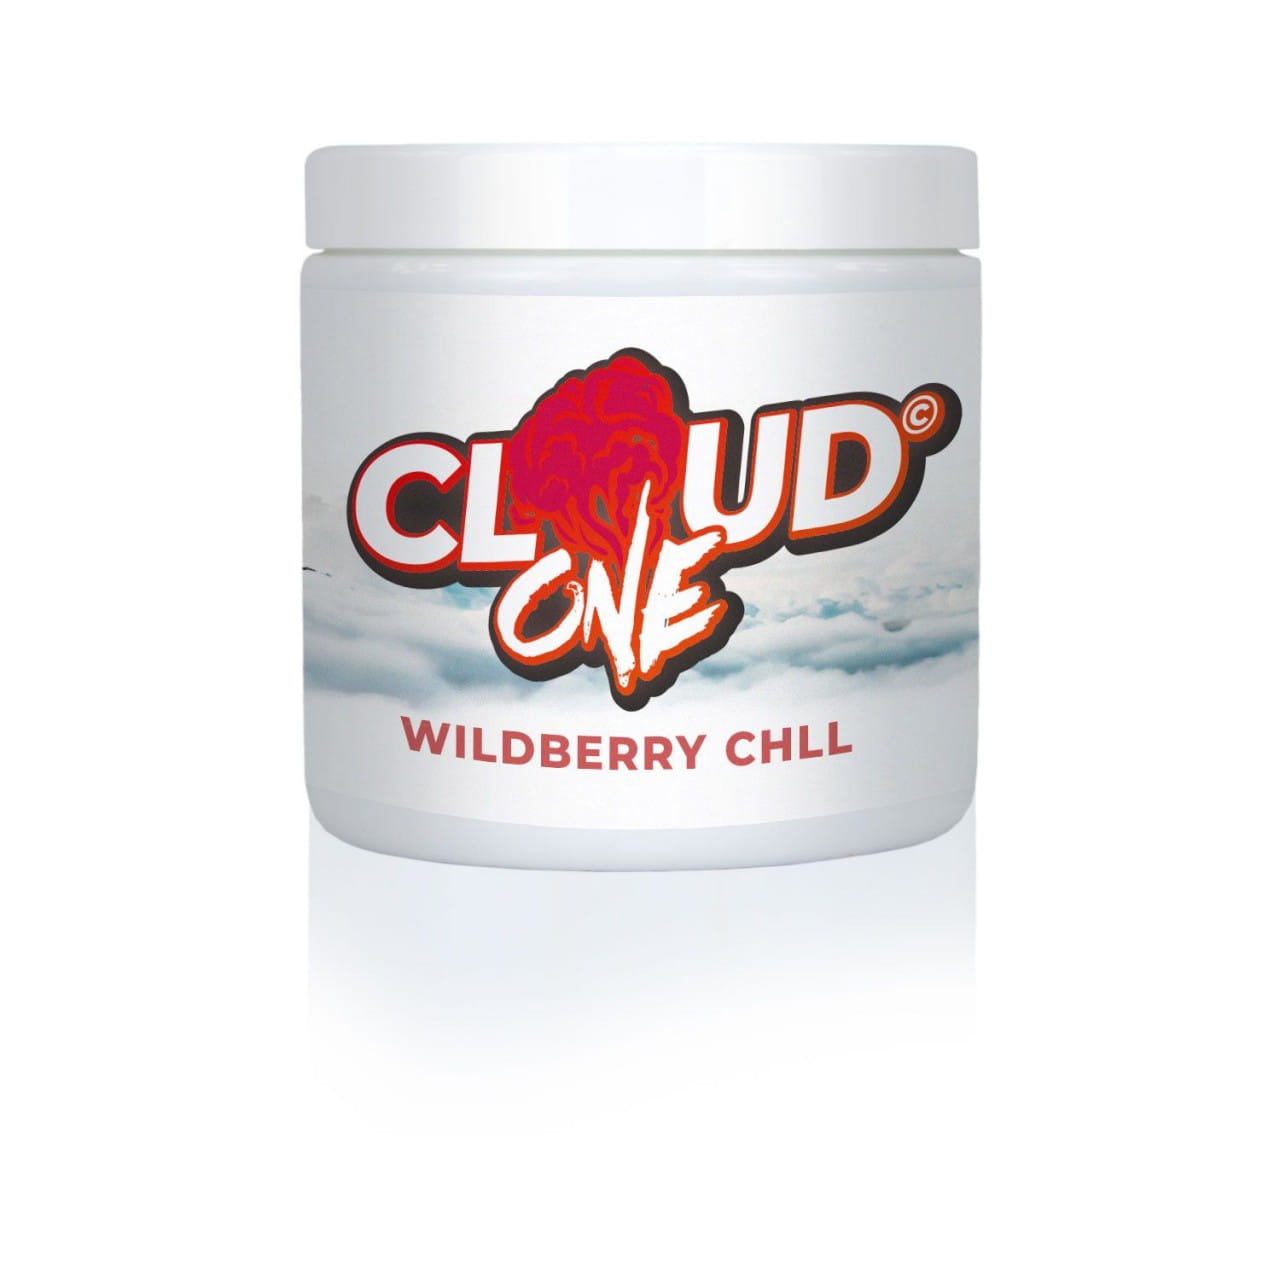 Cloud One - Wildberry Chill 200 g unter ohne Angabe